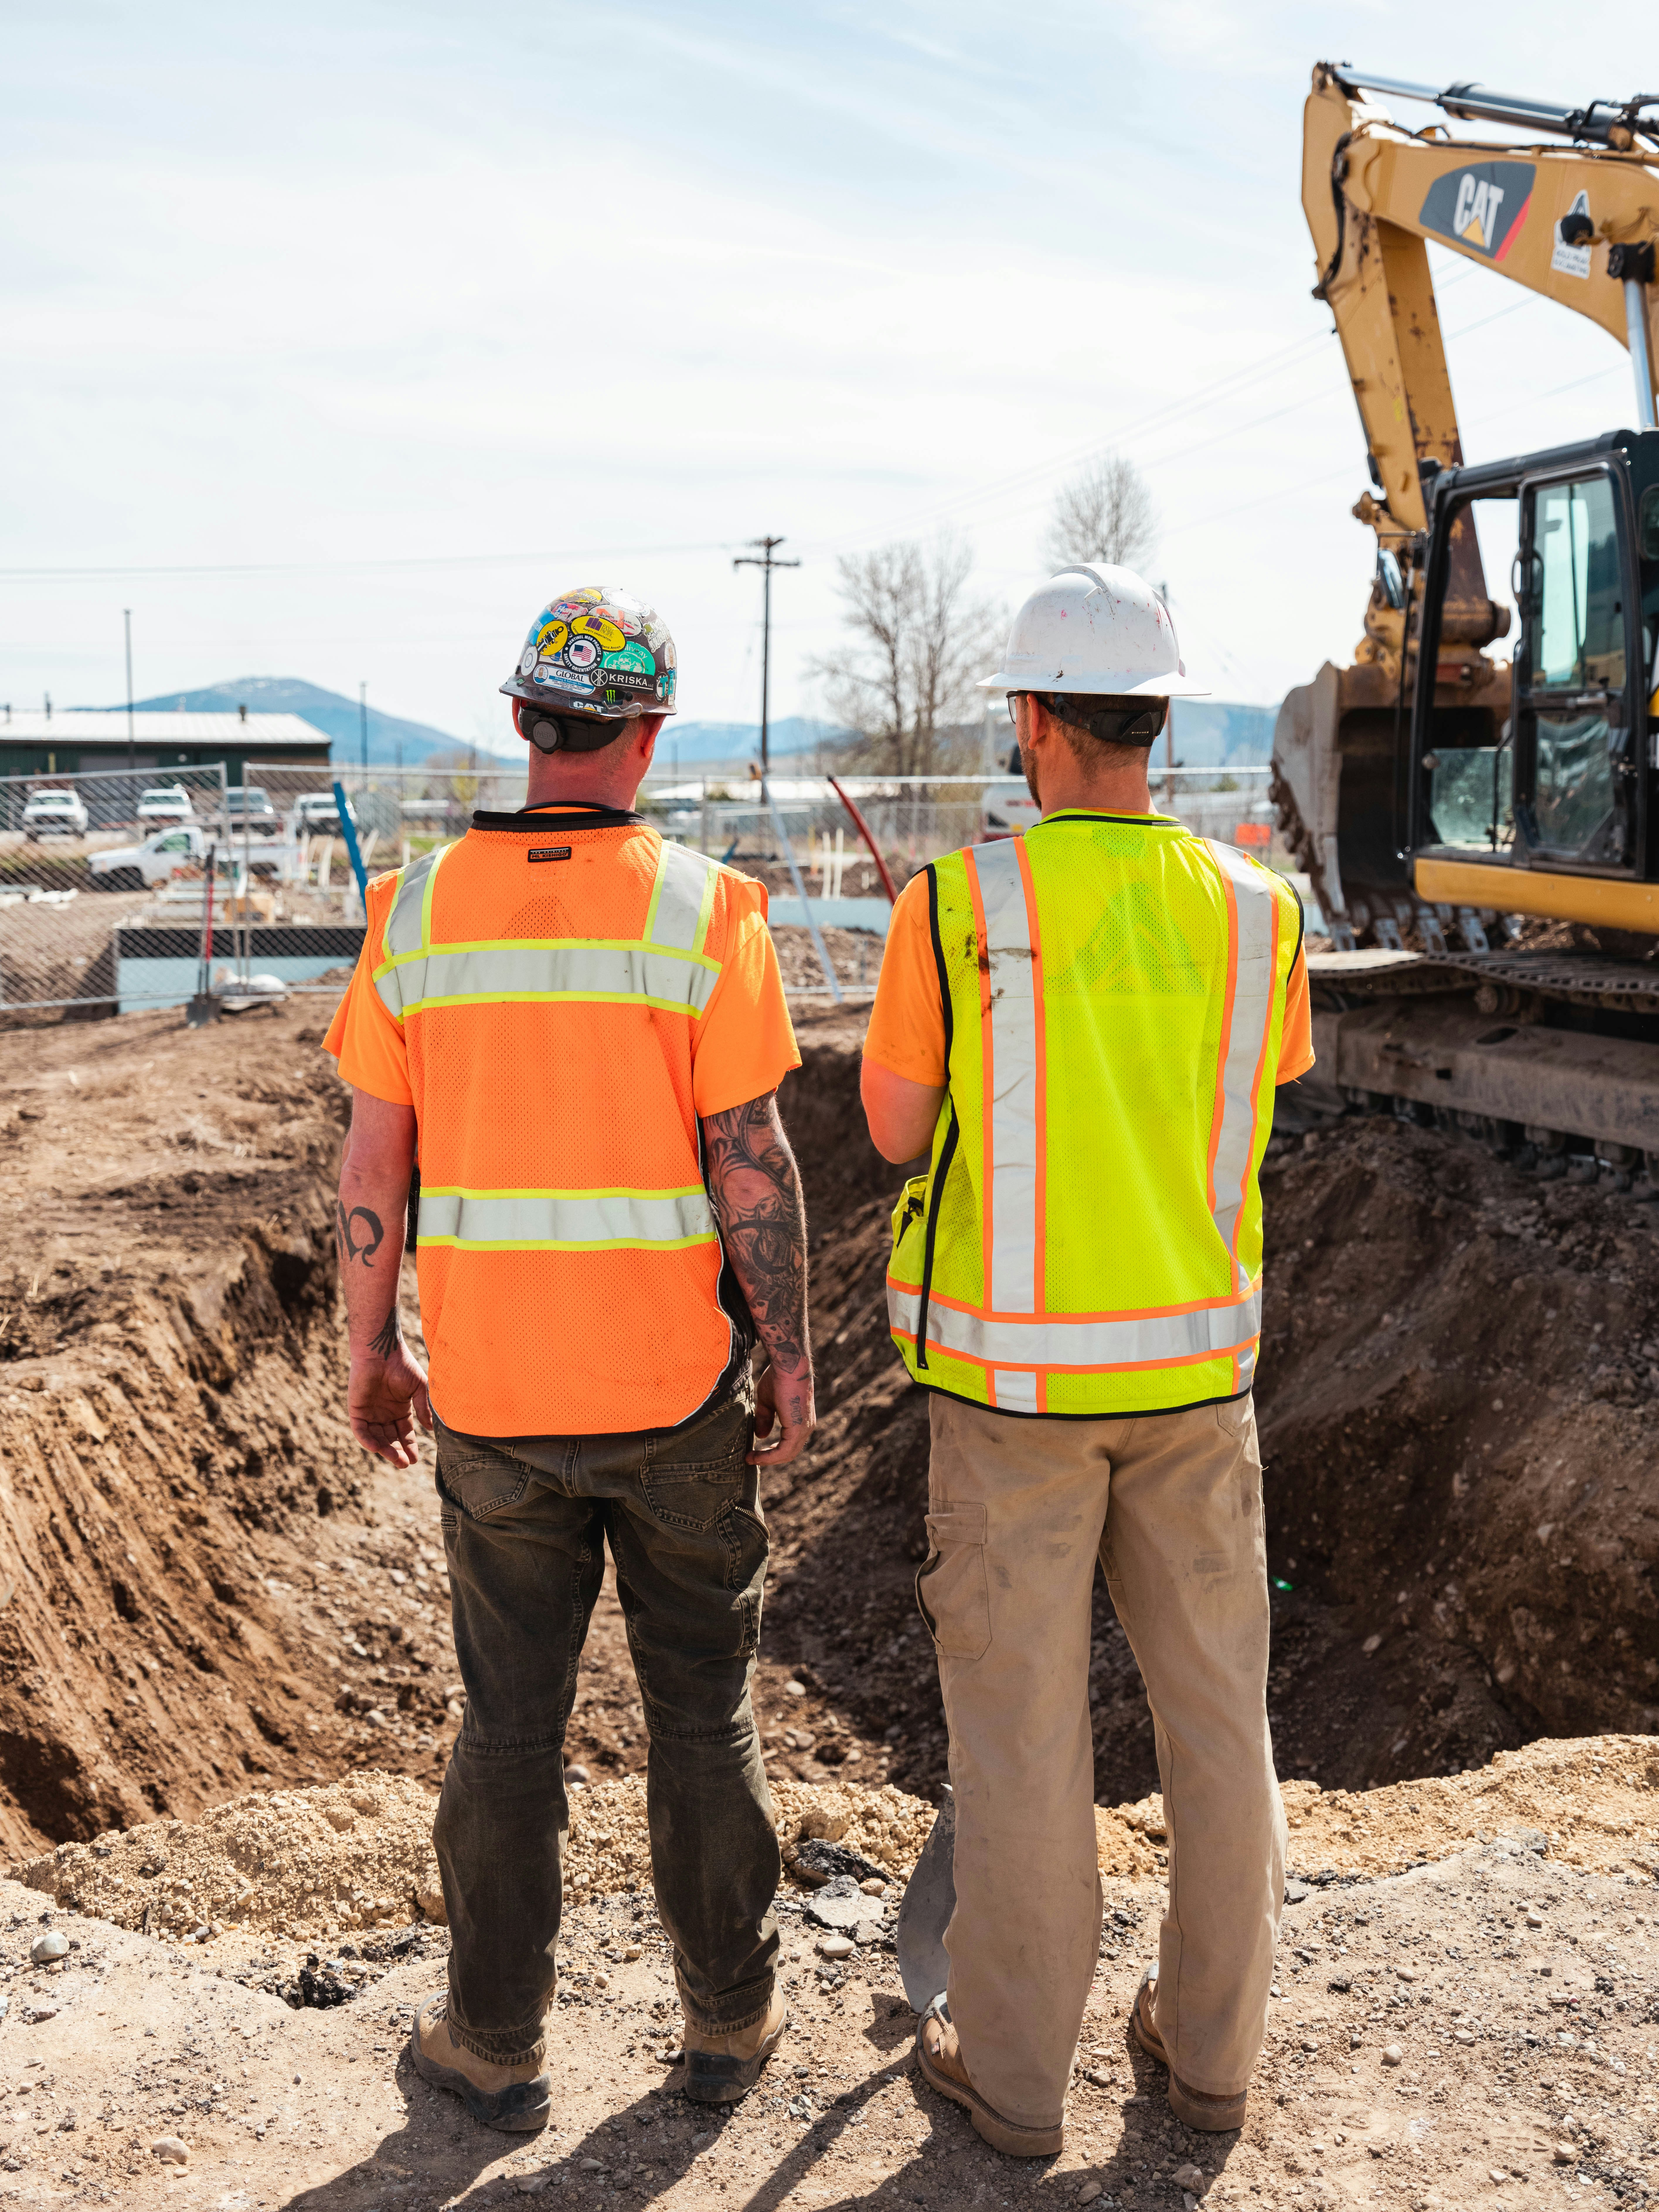 Civil engineers at construction site. Photo by John Kakuk via Pexels.